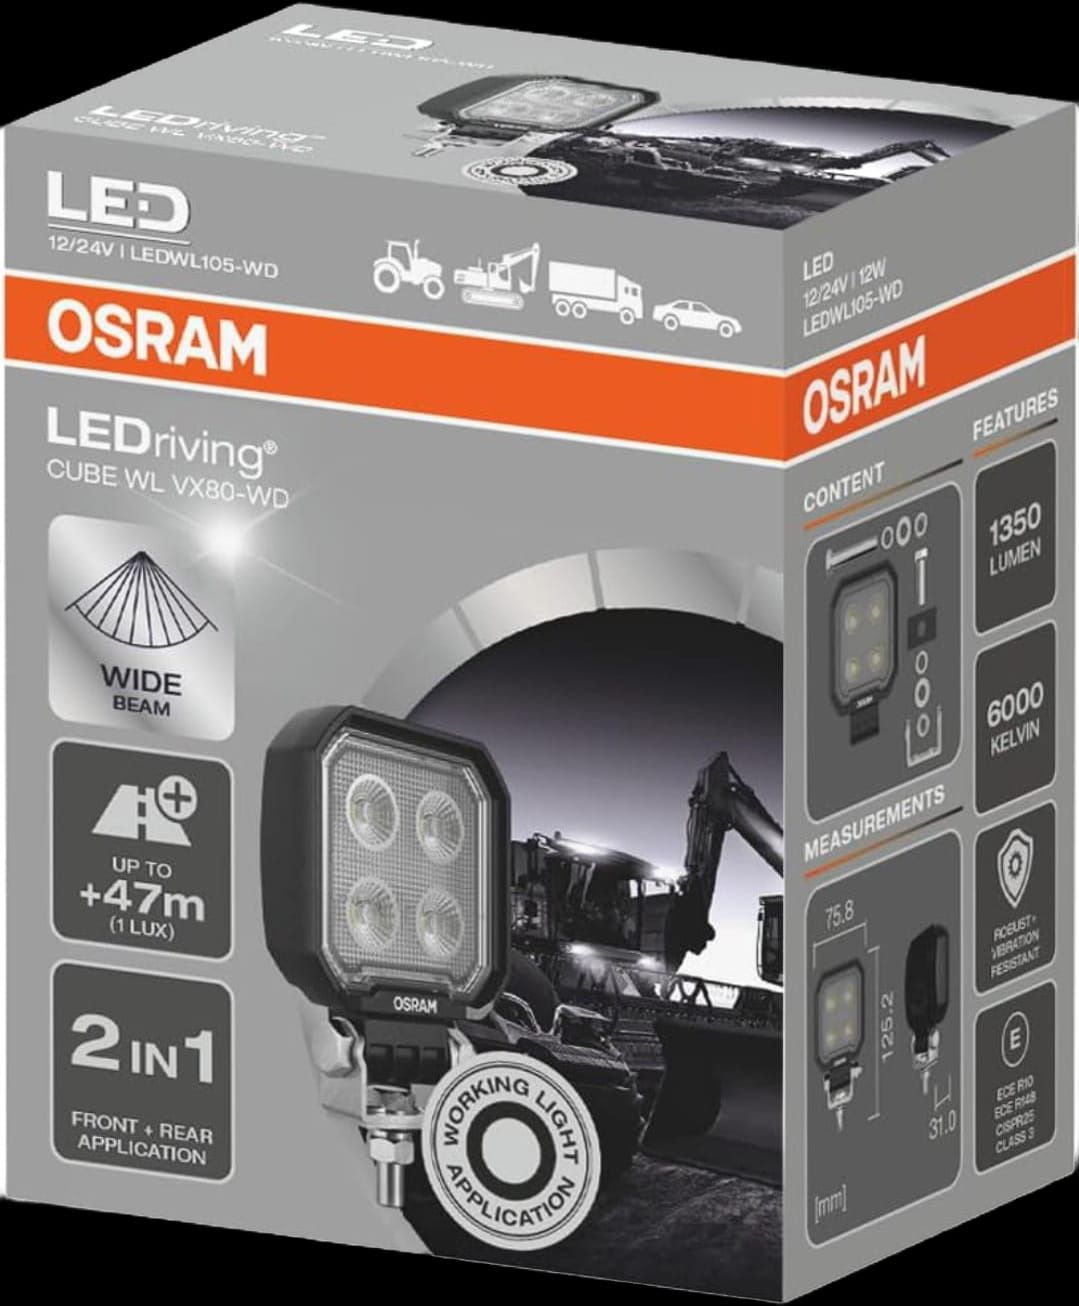 OSRAM LEDriving® Cube WL VX80-WD